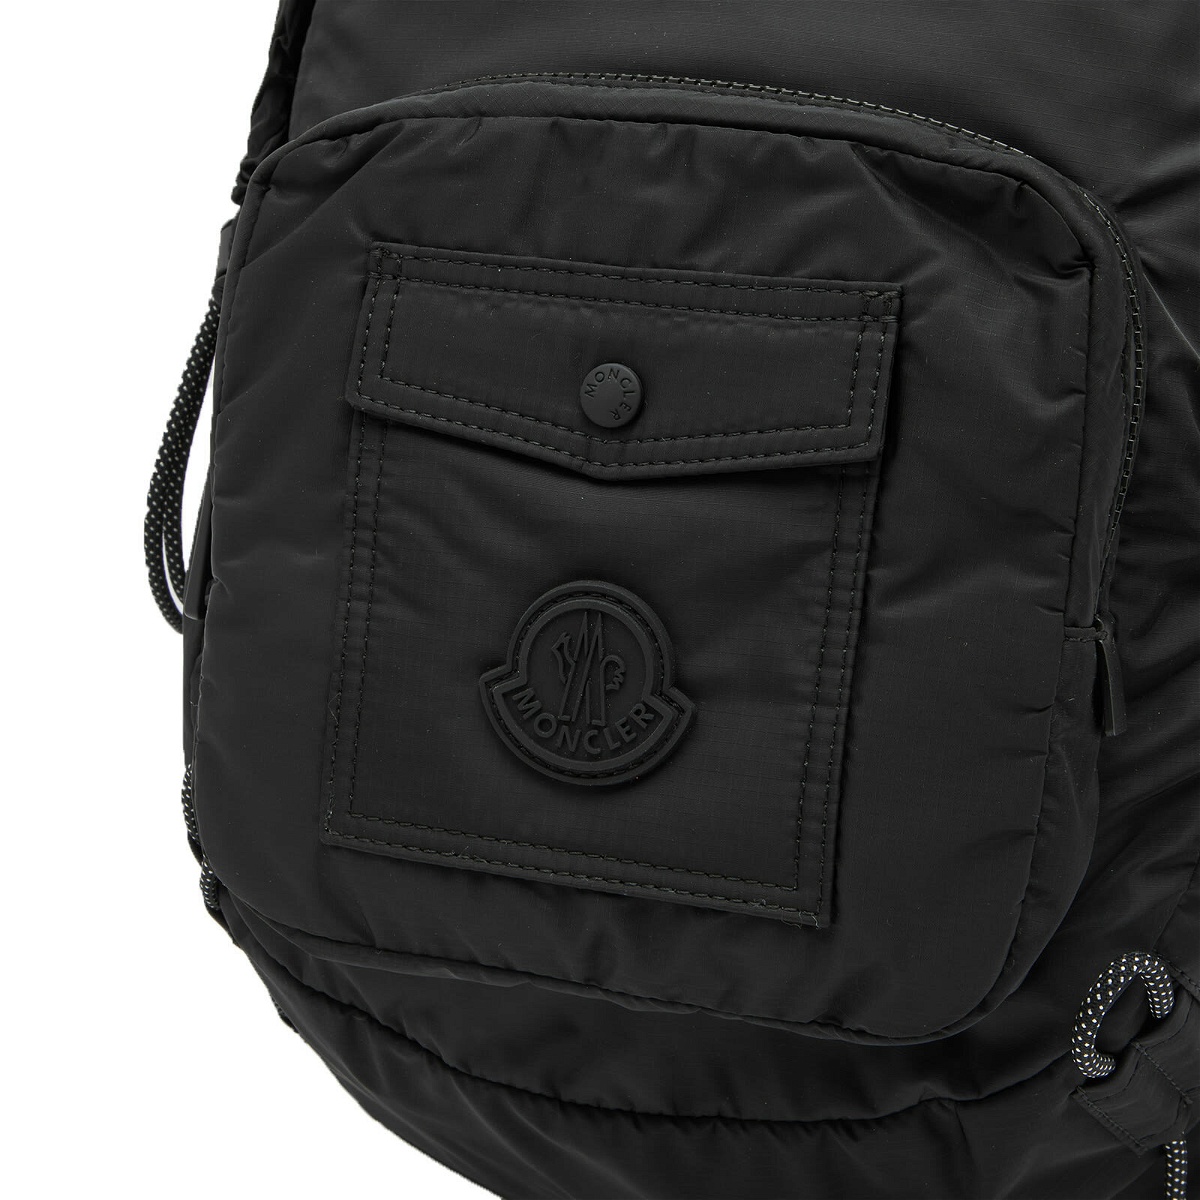 Makaio Backpack in Black - Moncler